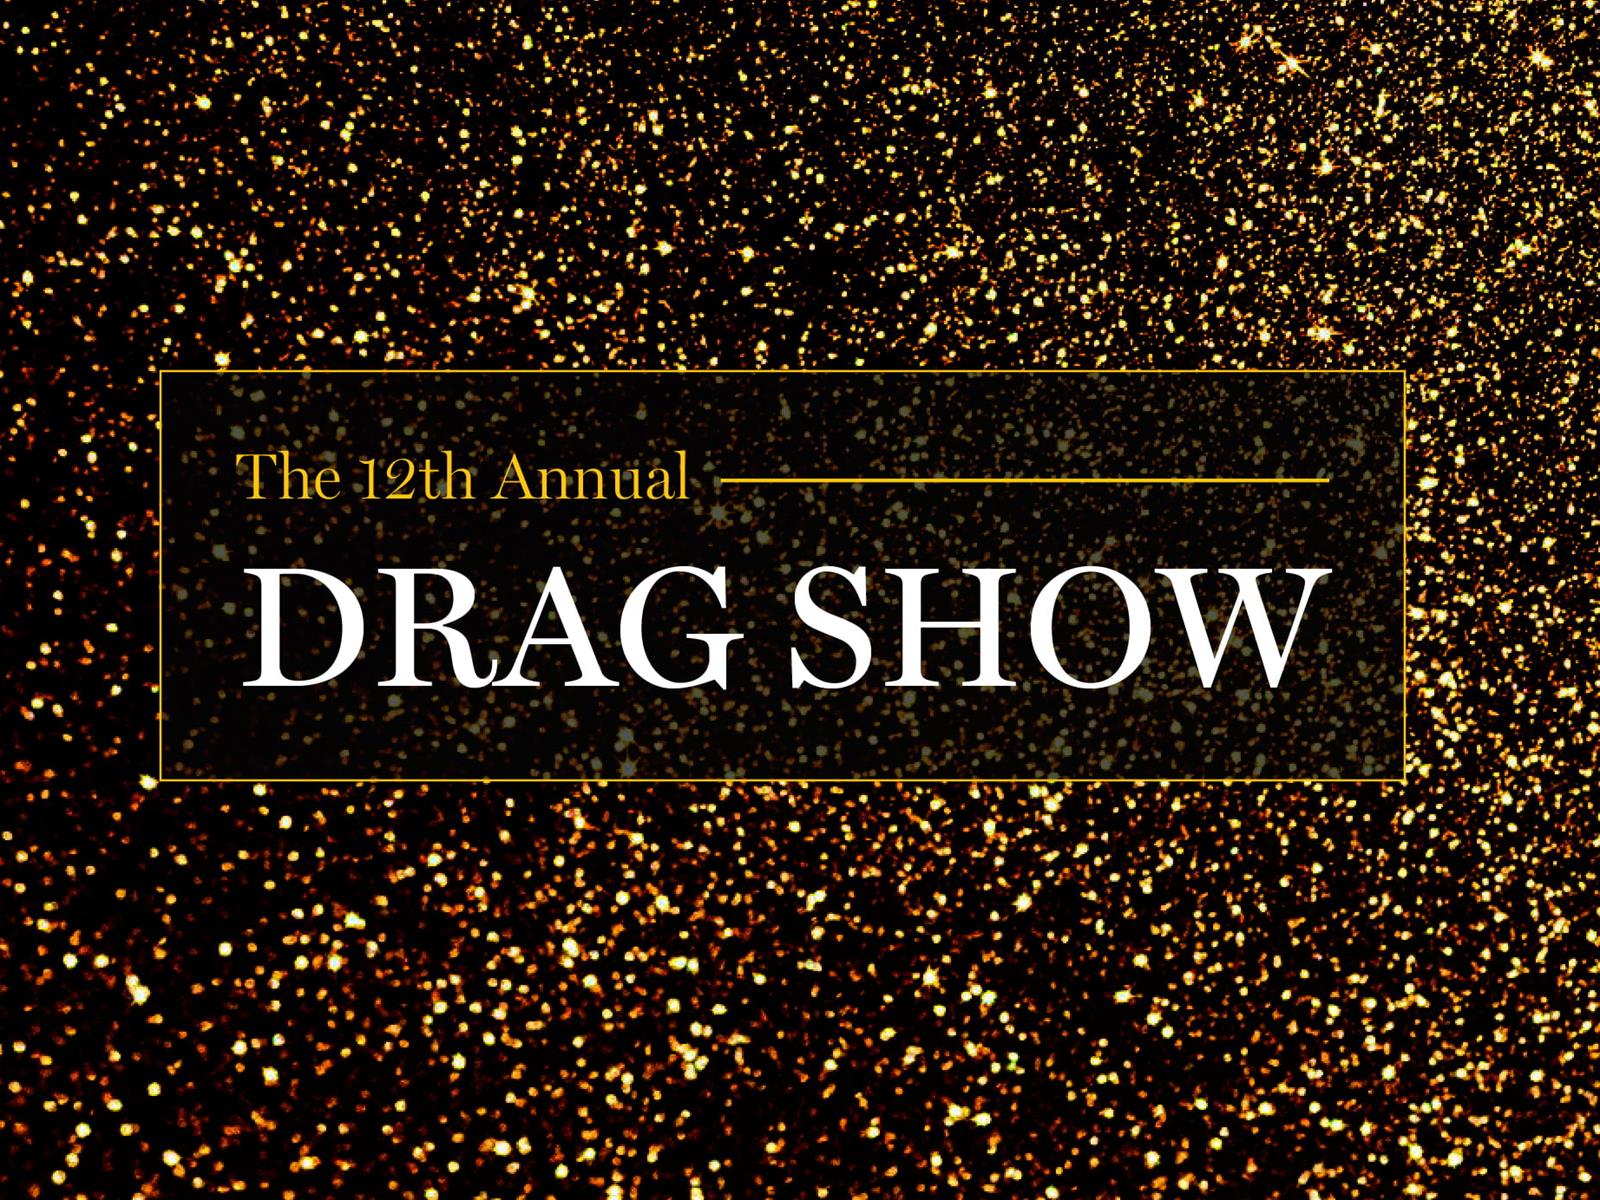 Drexel Drag Show Event